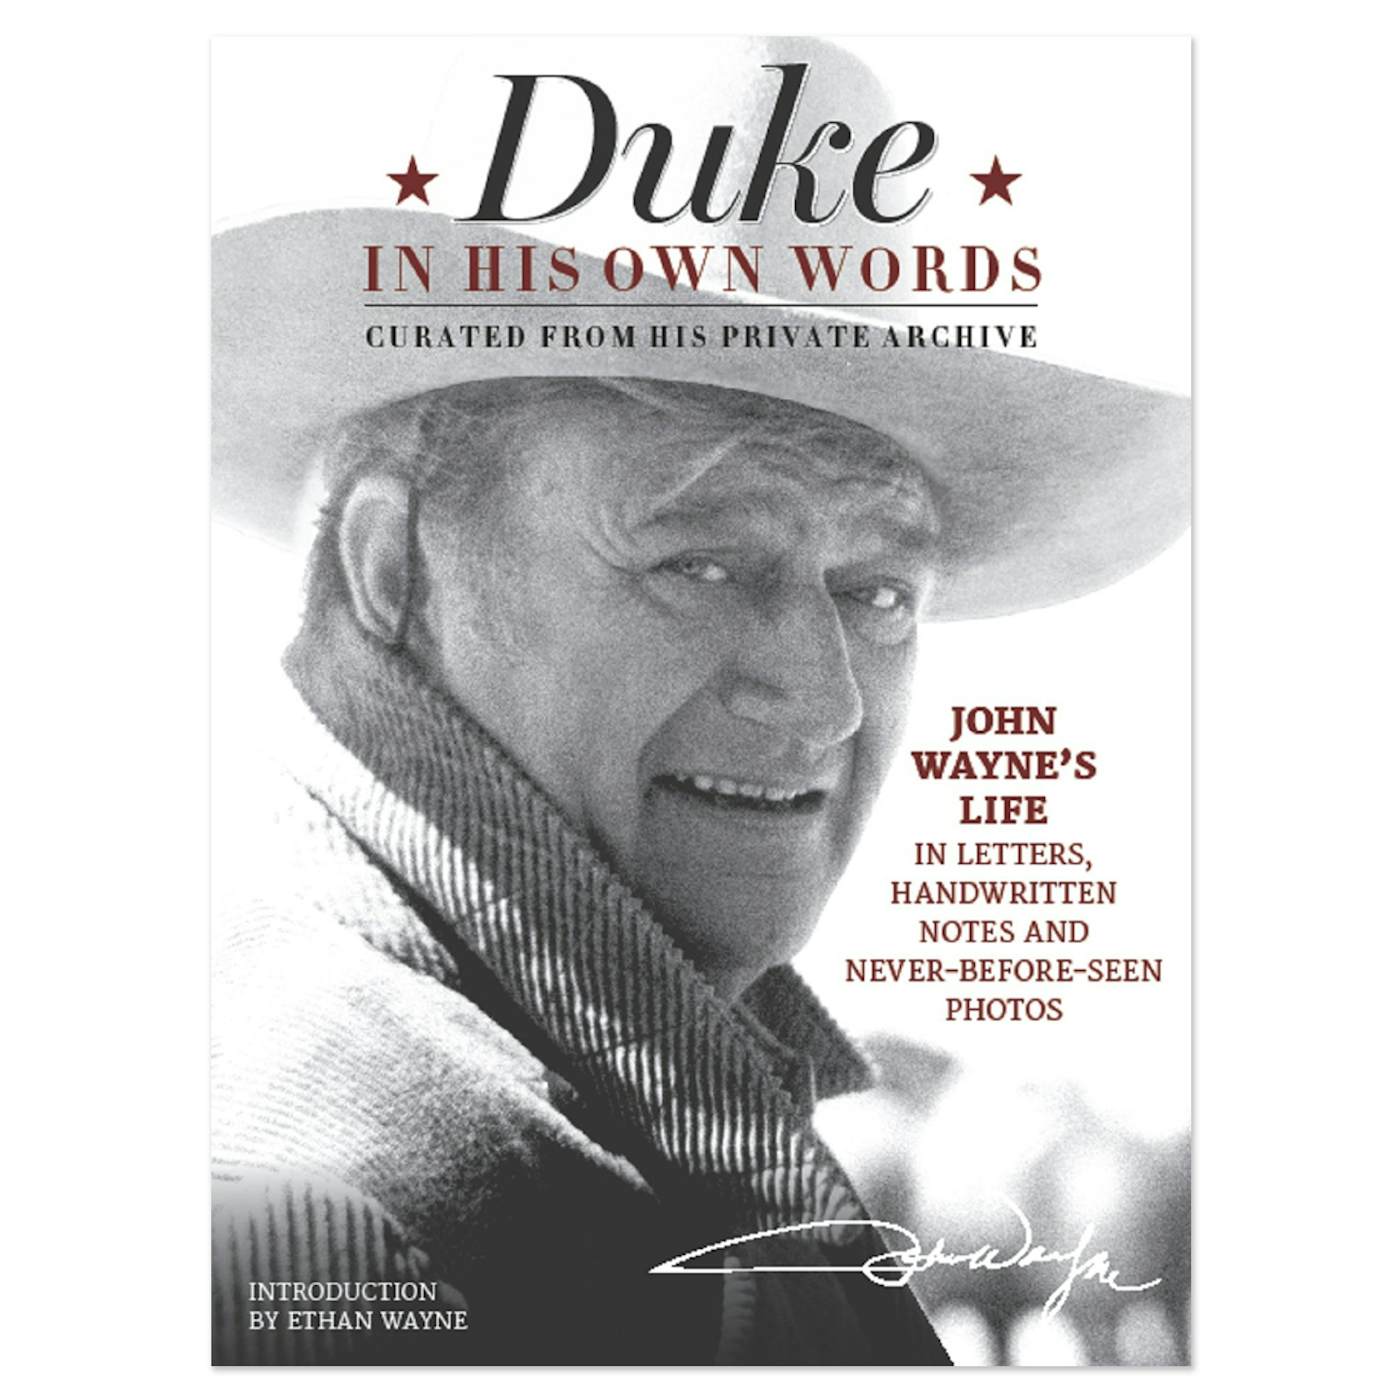 John Wayne "Duke In His Own Words"